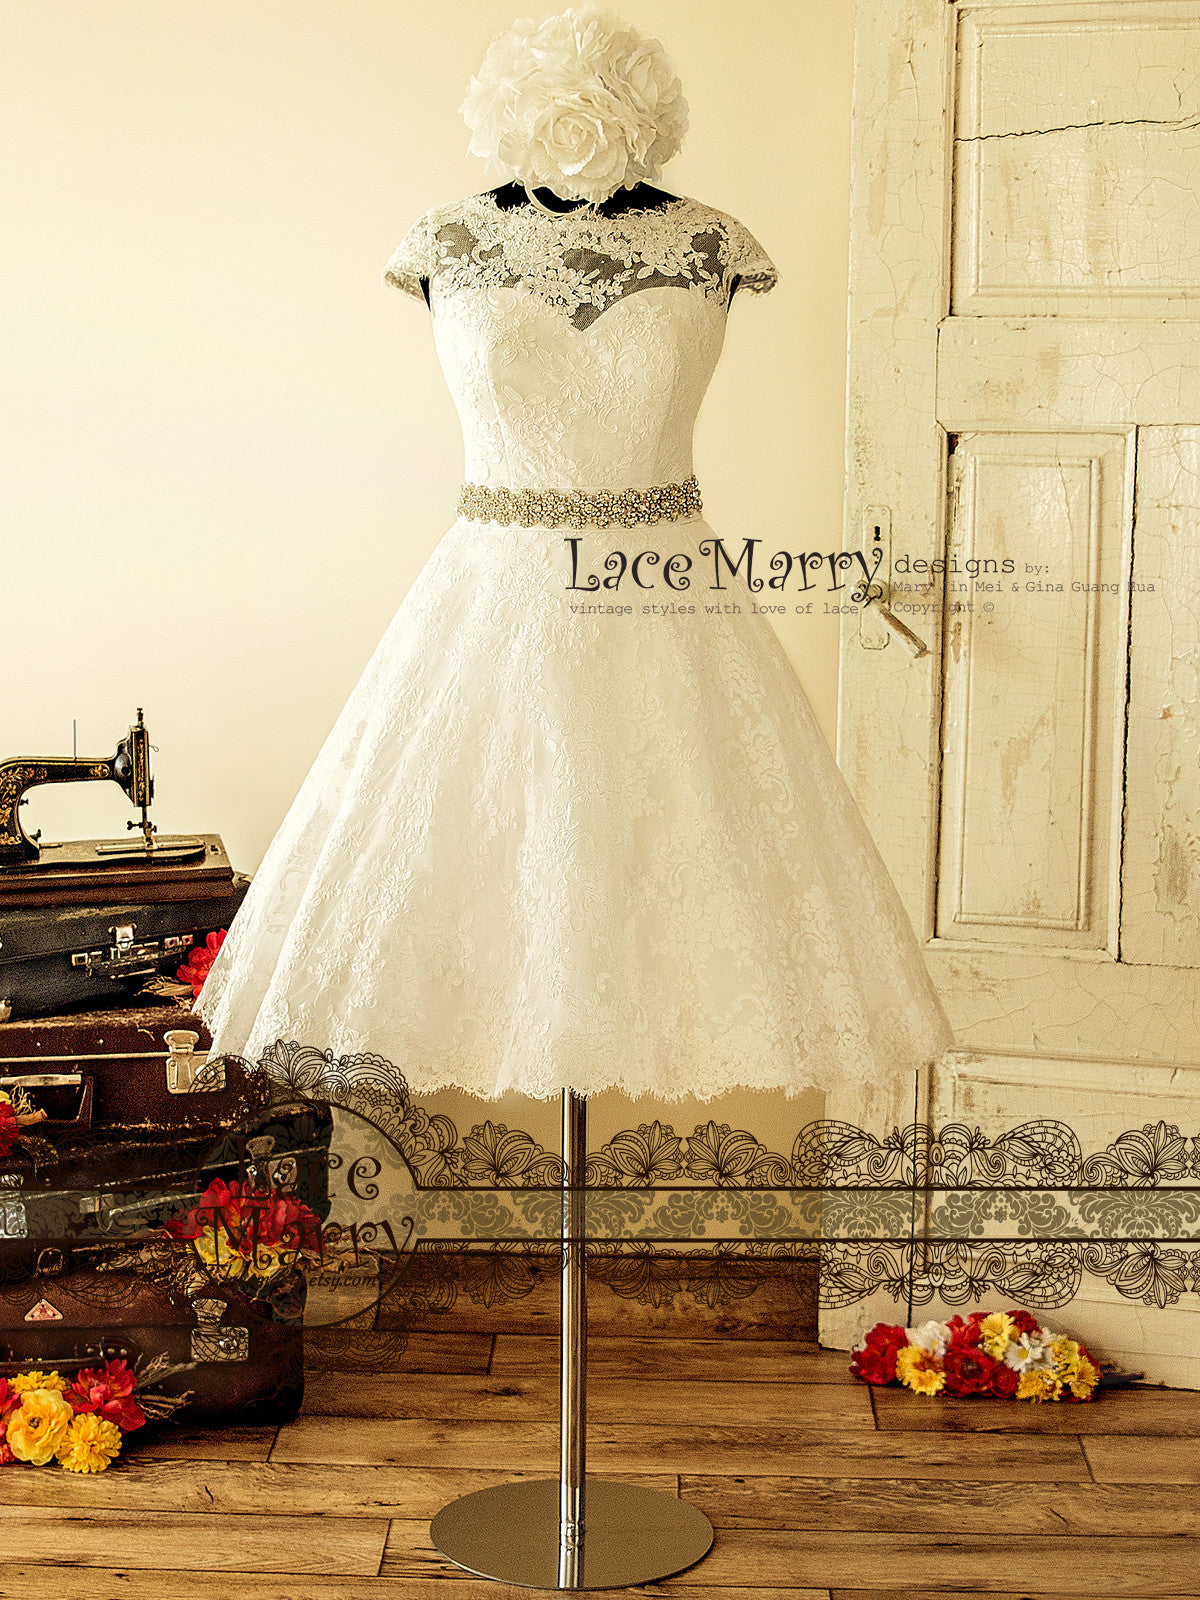 knee length wedding dresses